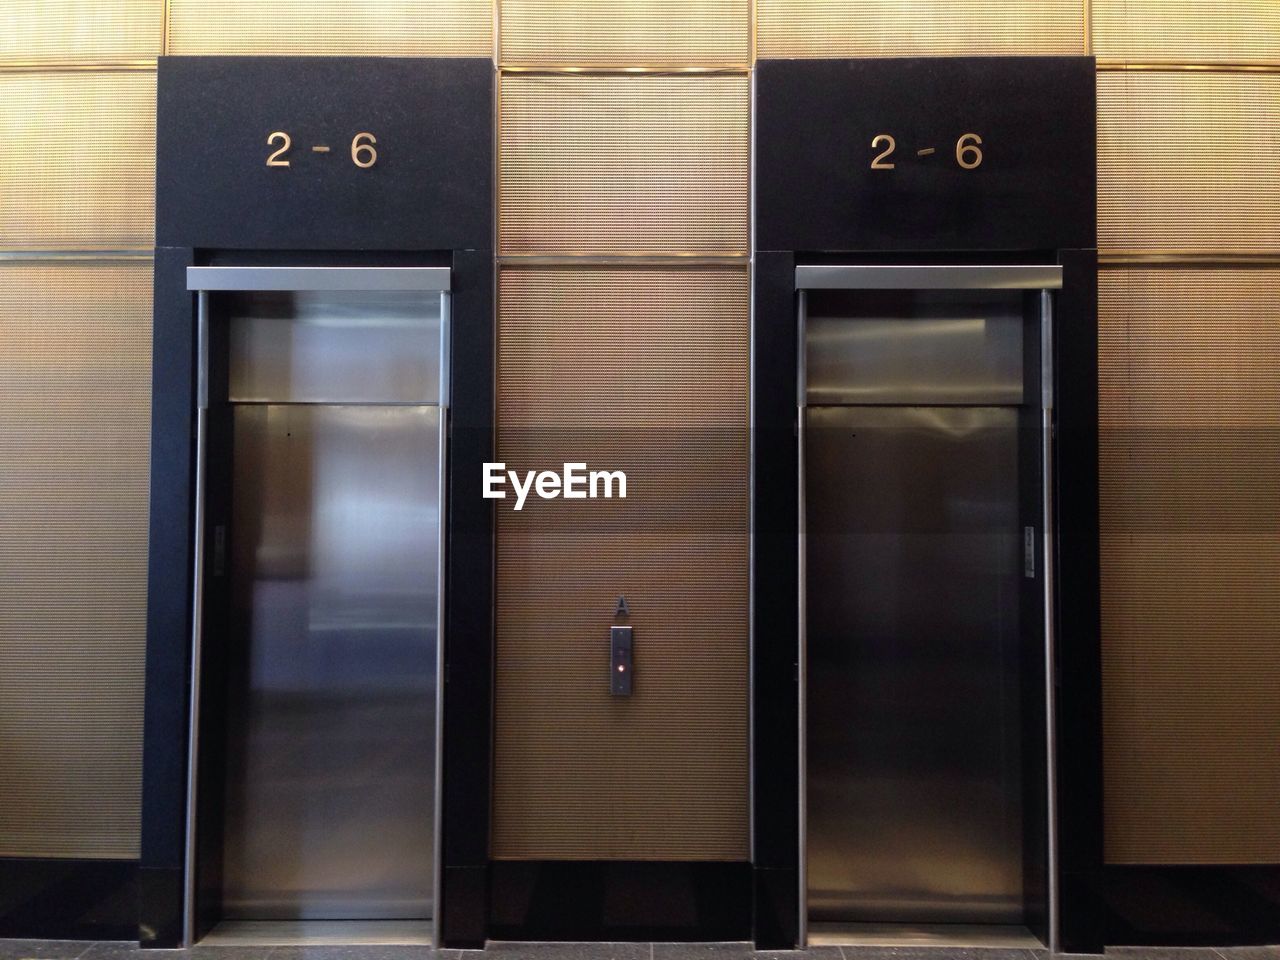 Stainless steel elevators